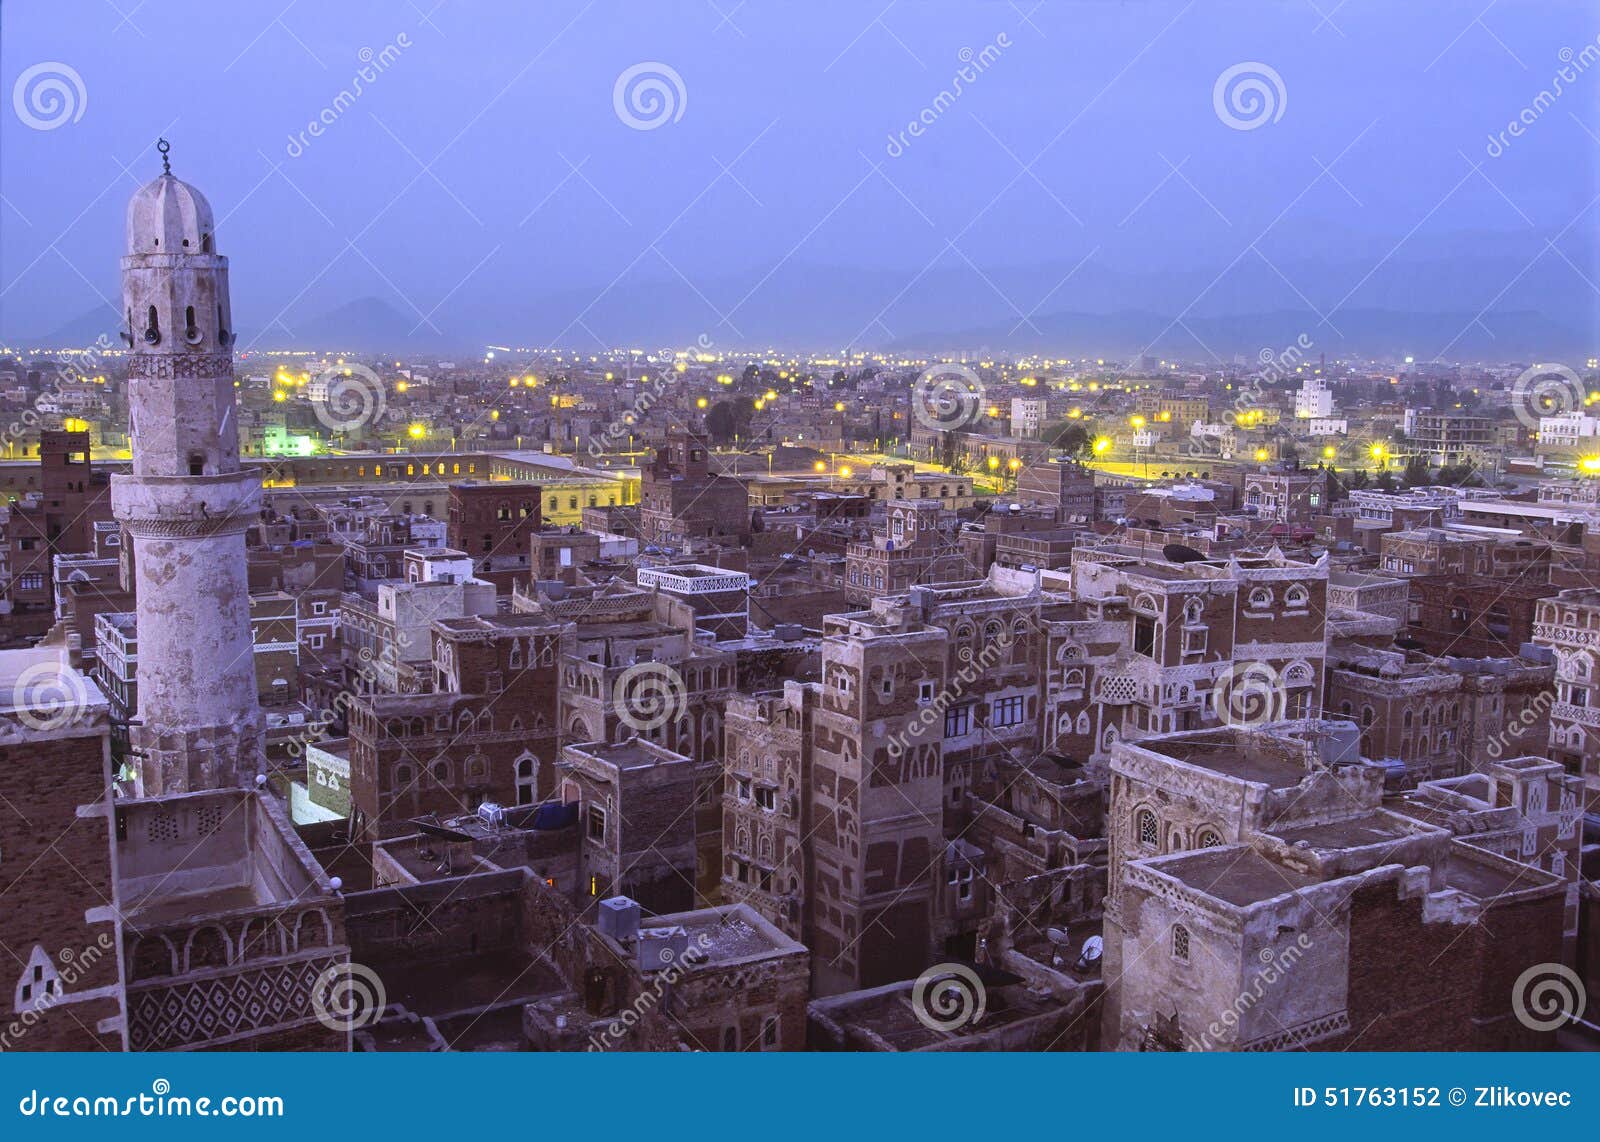 sana, capital city of yemen